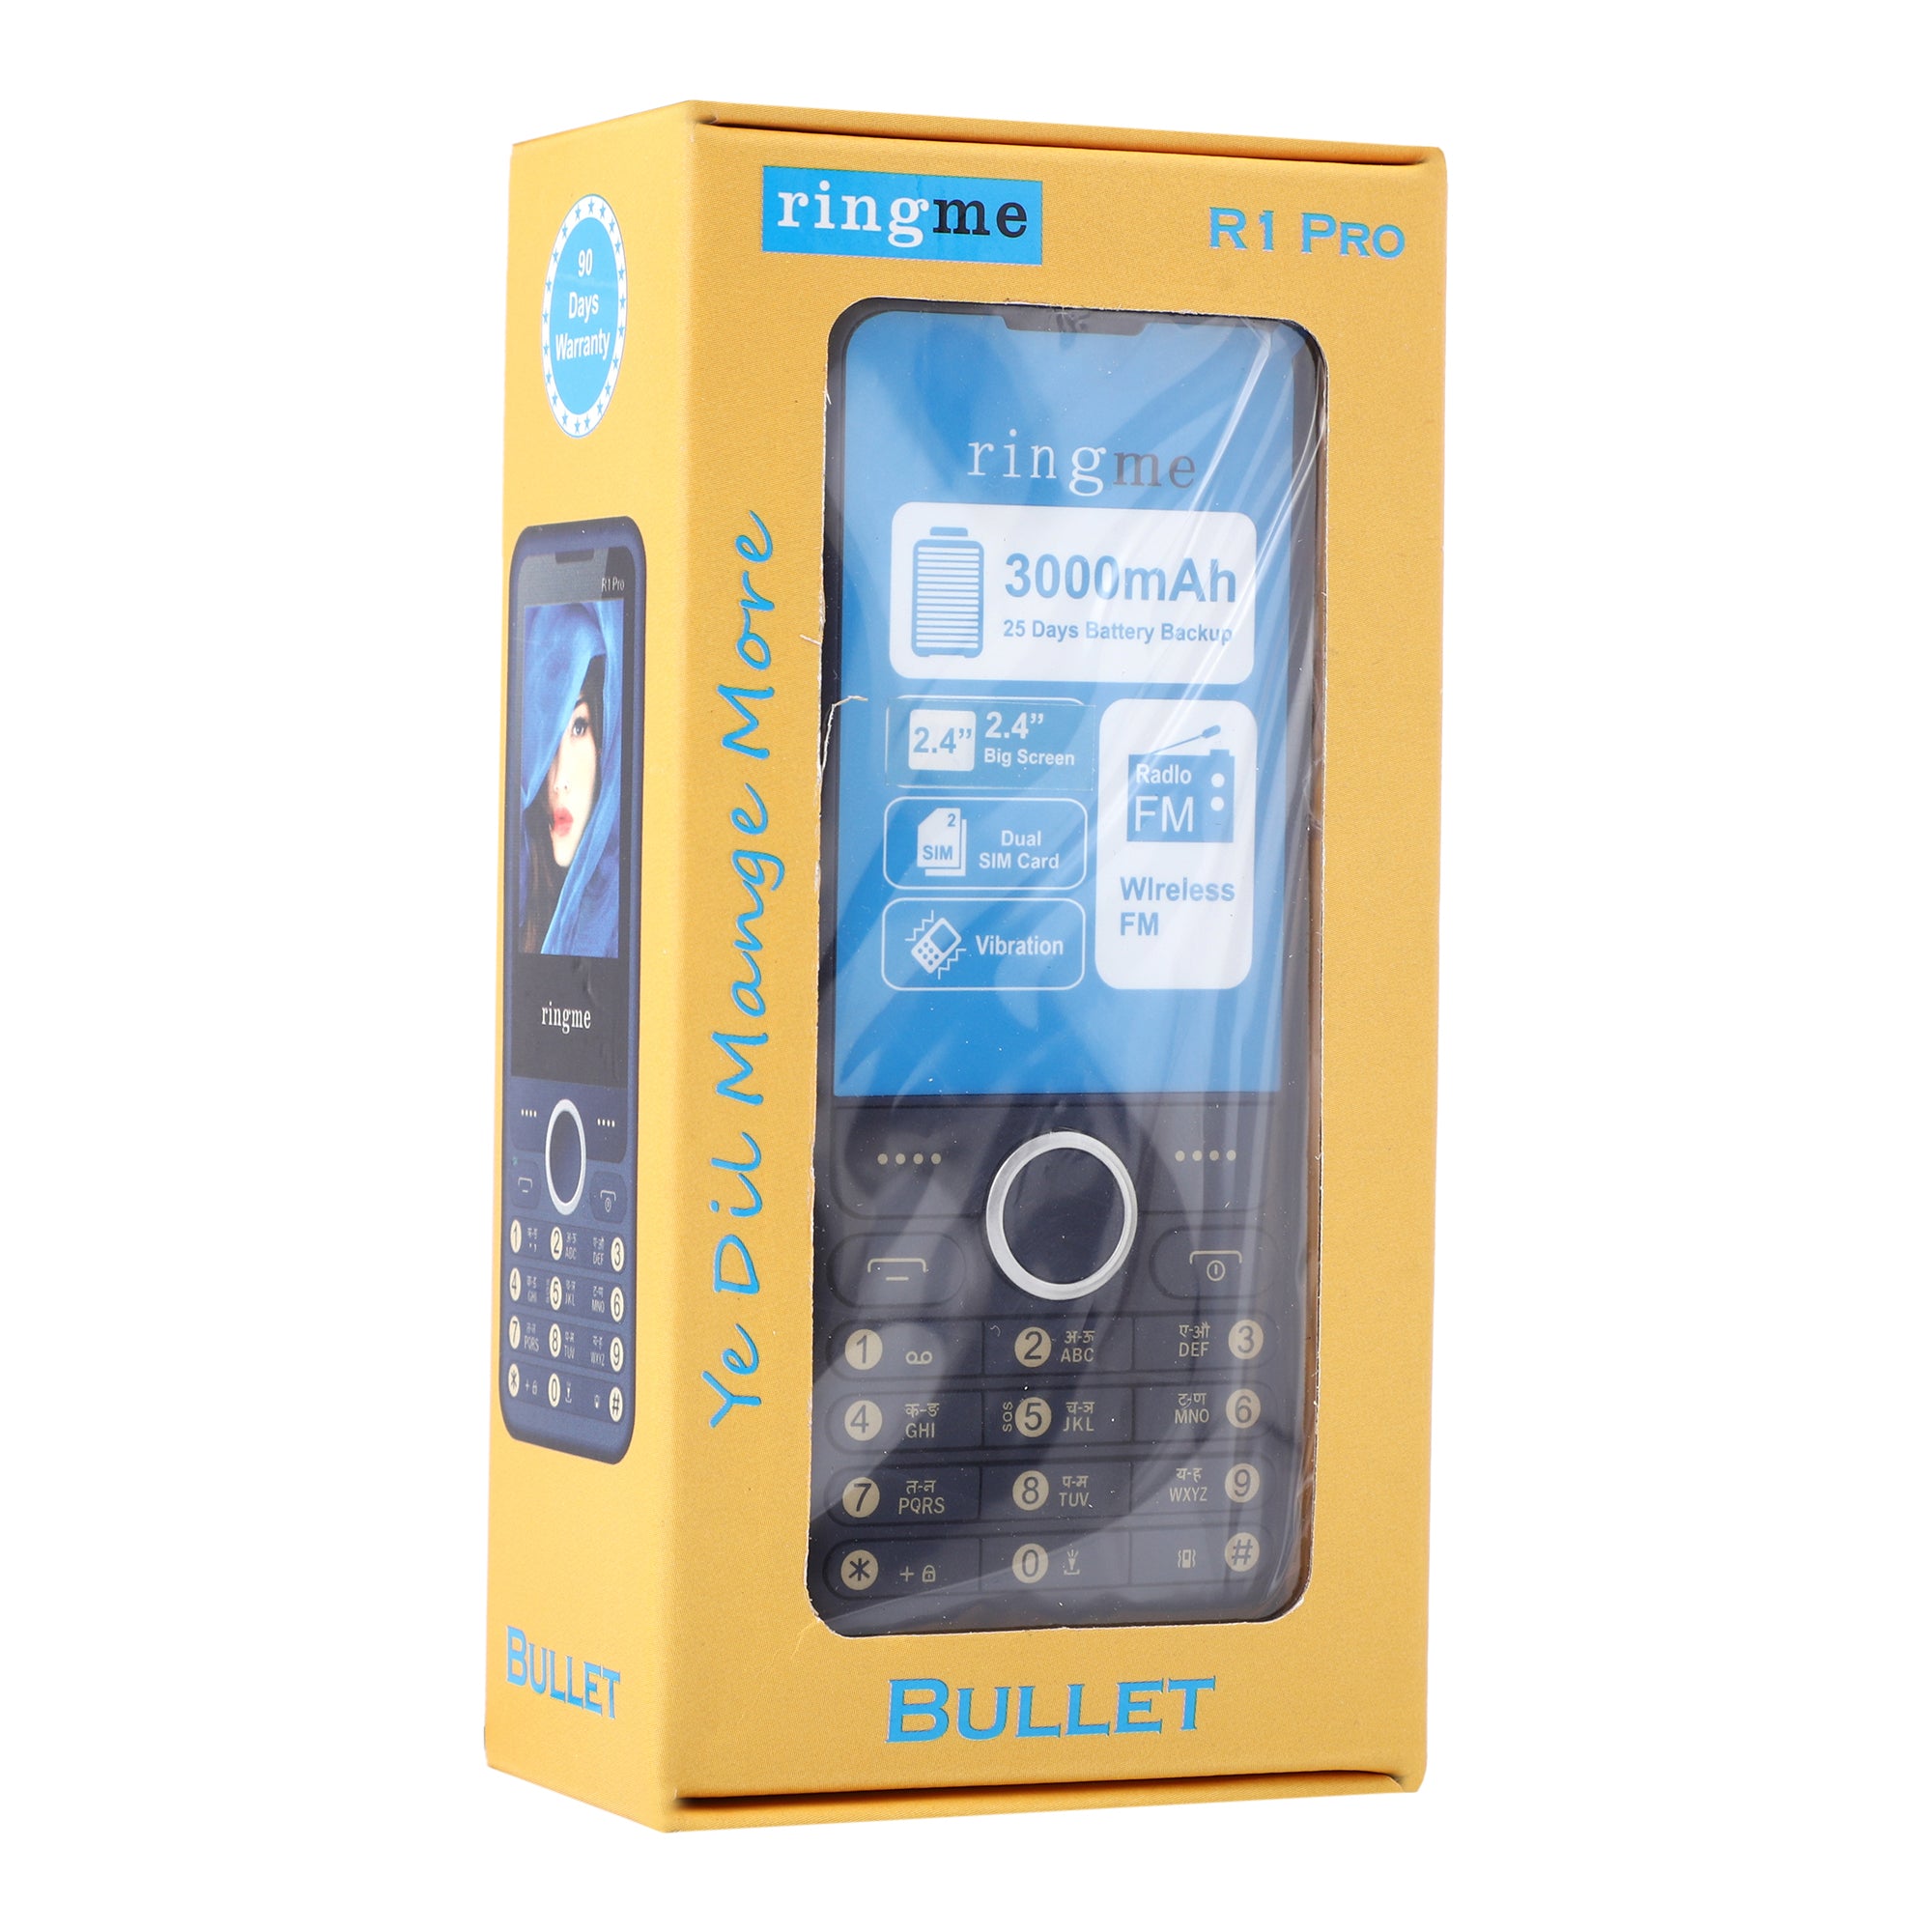 Ringme Bullet Mobile Phone Feature Phone with Dual SIM Card, Camera, Auto Call Recording (Blue, 2.4 inch Big screen, 3000mAh Big Battery)